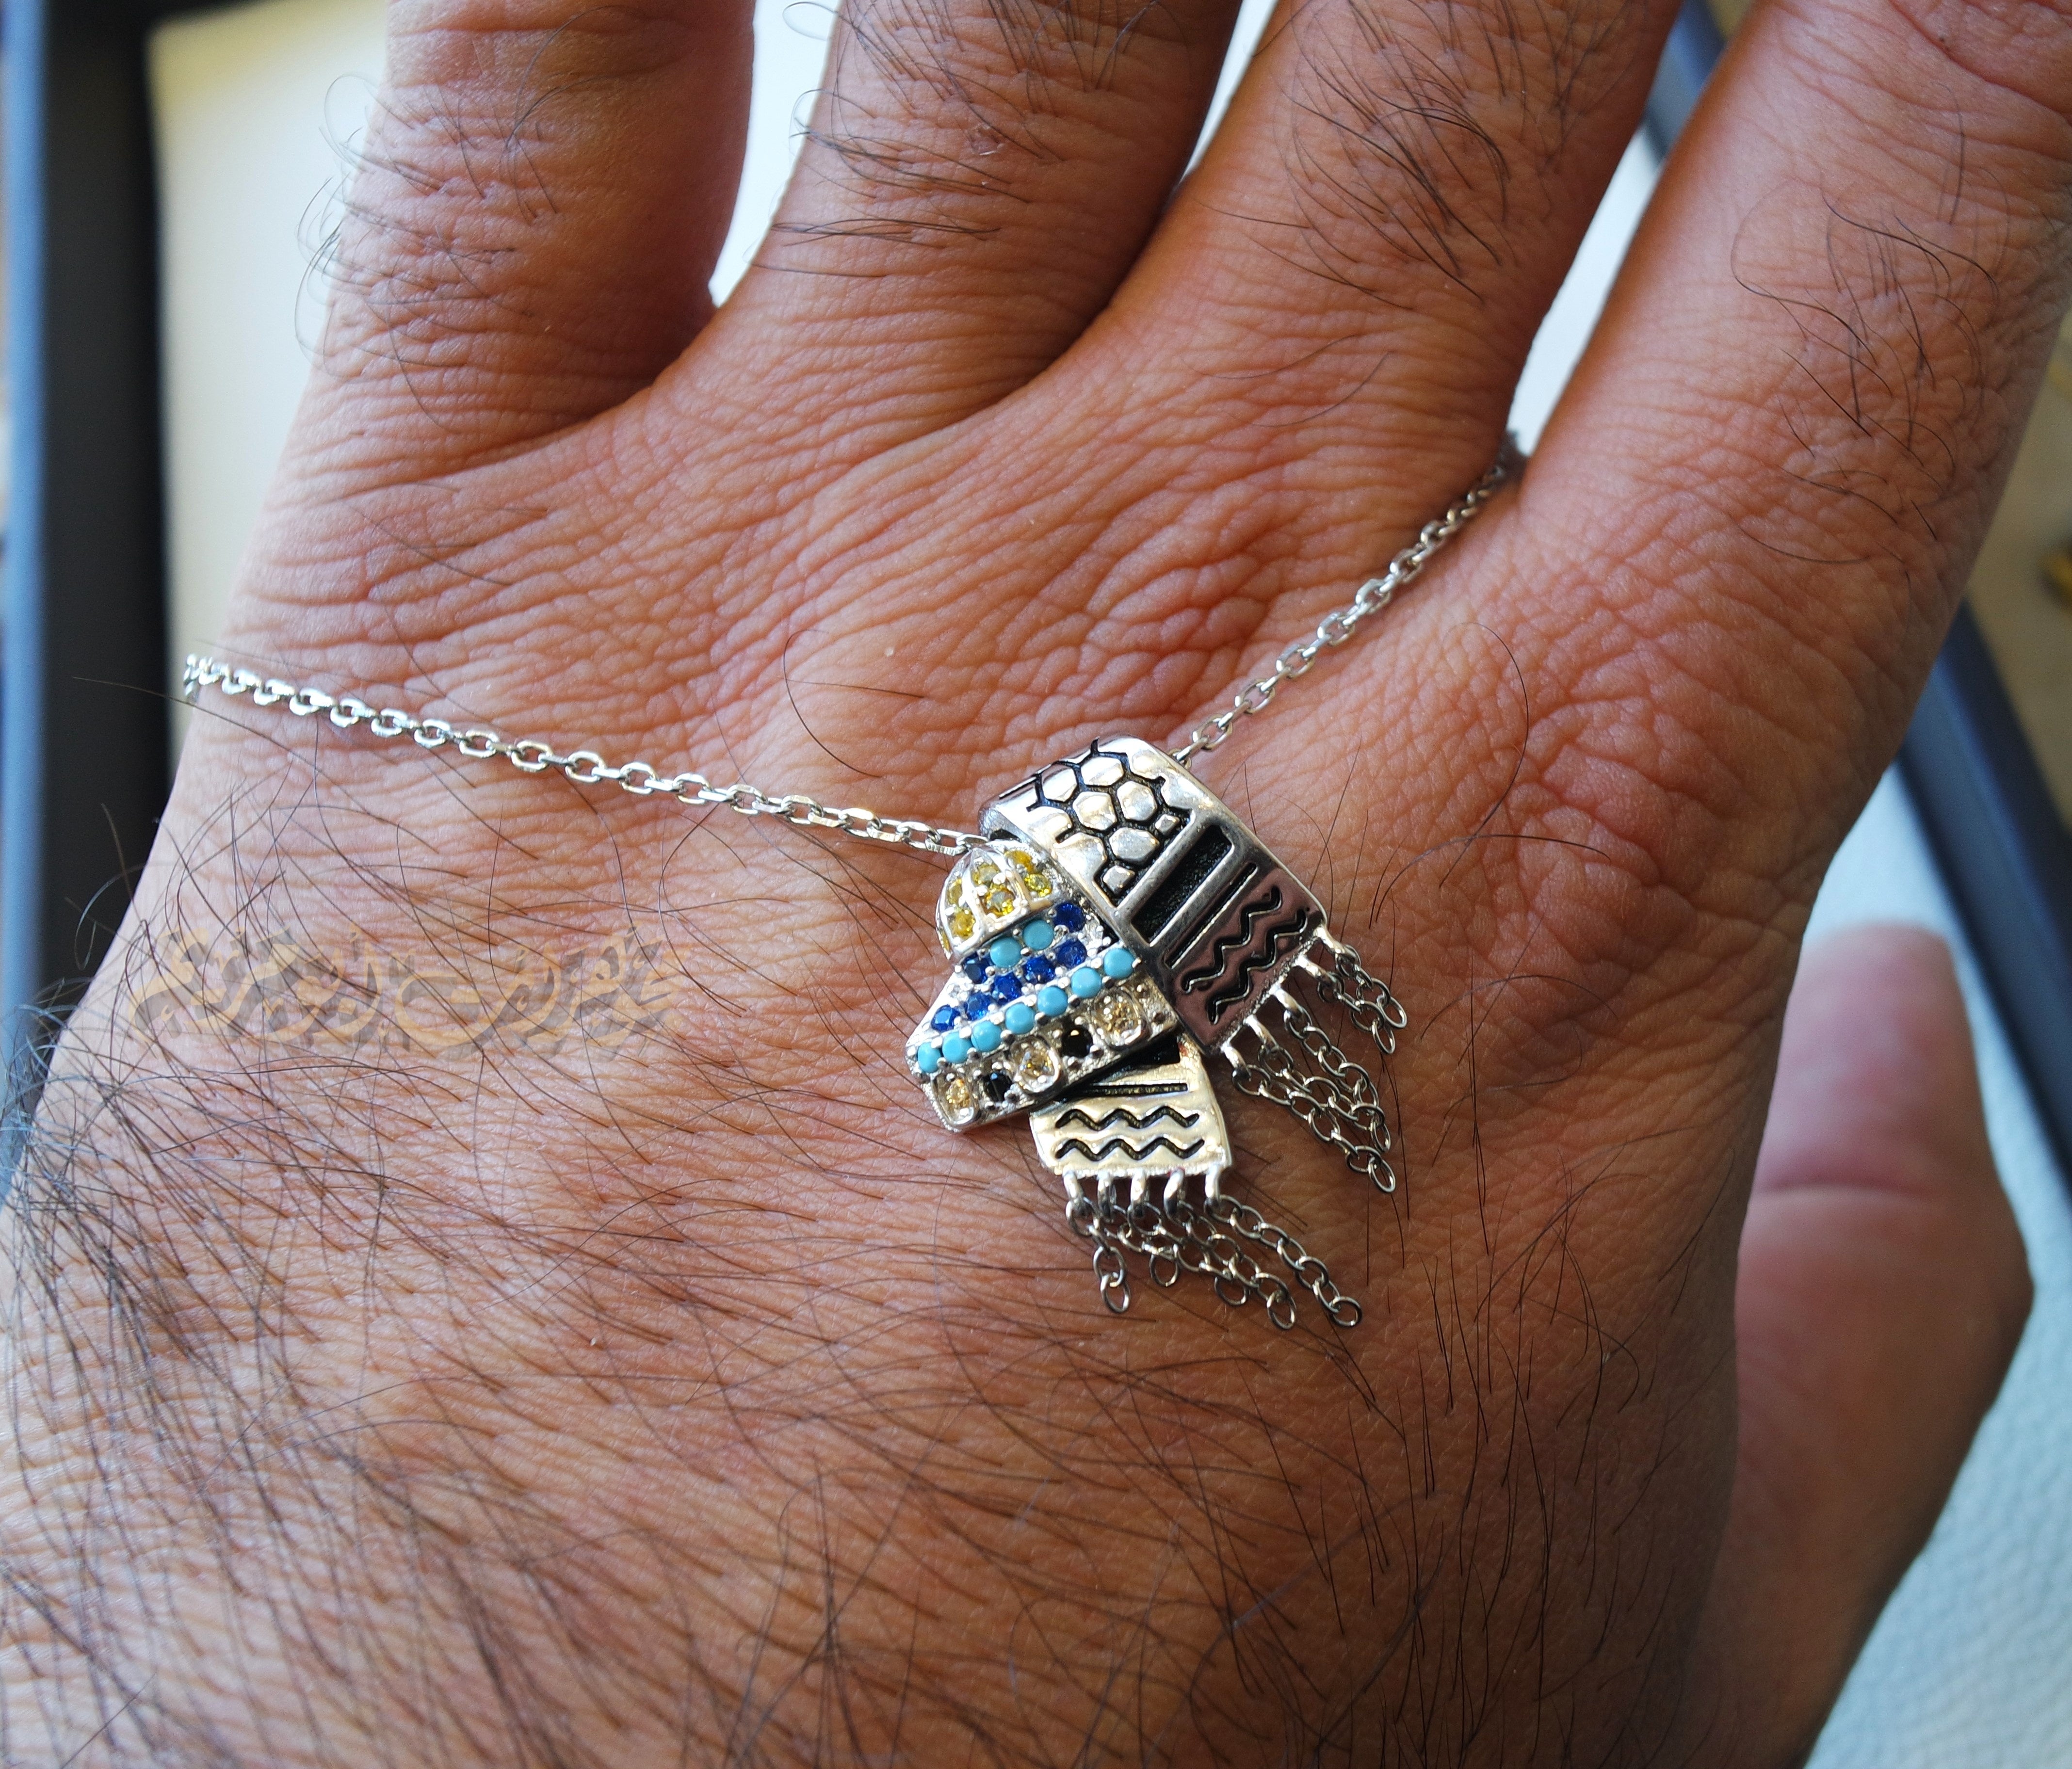 Palestine koufeyeh ِAqsa necklace sterling silver 925 high quality jewelry koufyeh Arabic fast shipping  قبة الصخرة كوفية كوفيه خارطه فلسطين